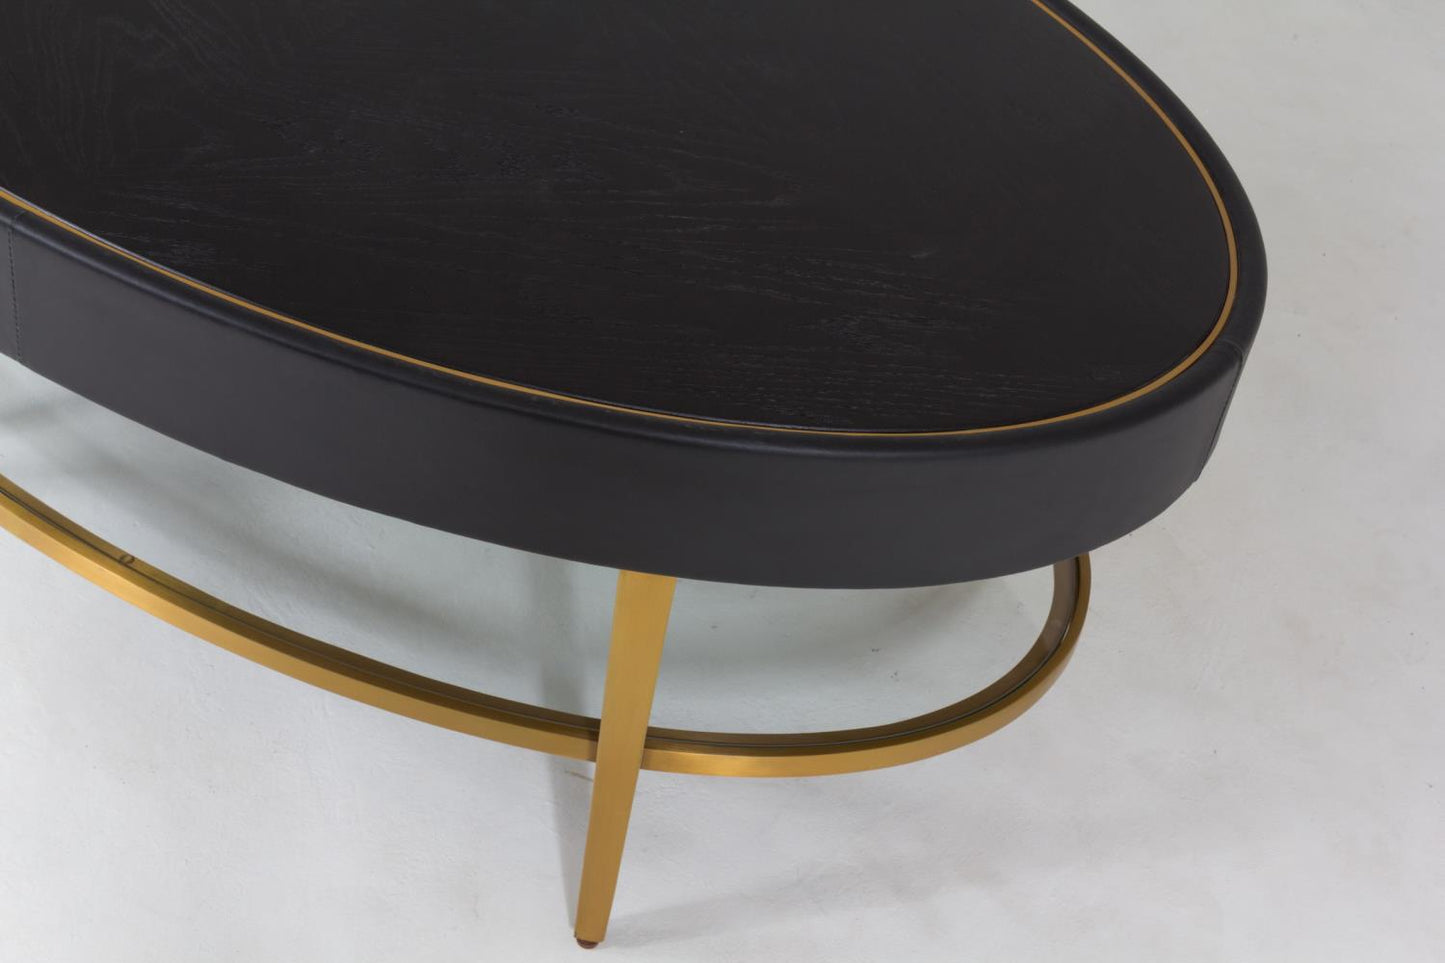 Ellipse Cocktail Table - Ebony - Grats Decor Interior Design & Build Inc.